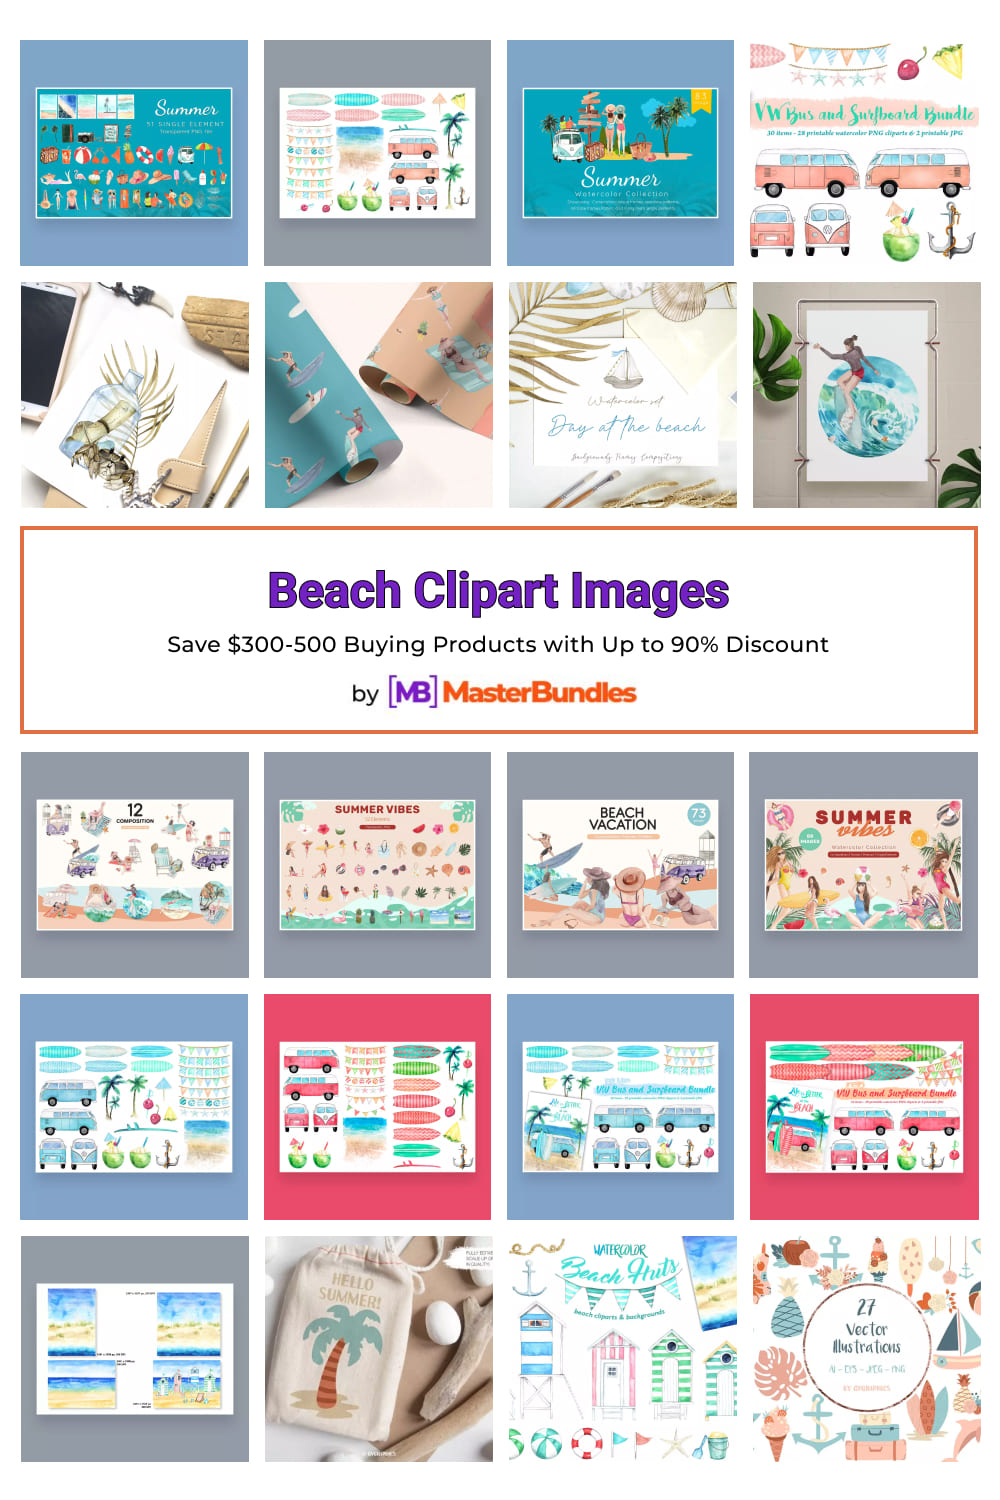 Beach Clipart Images Pinterest.